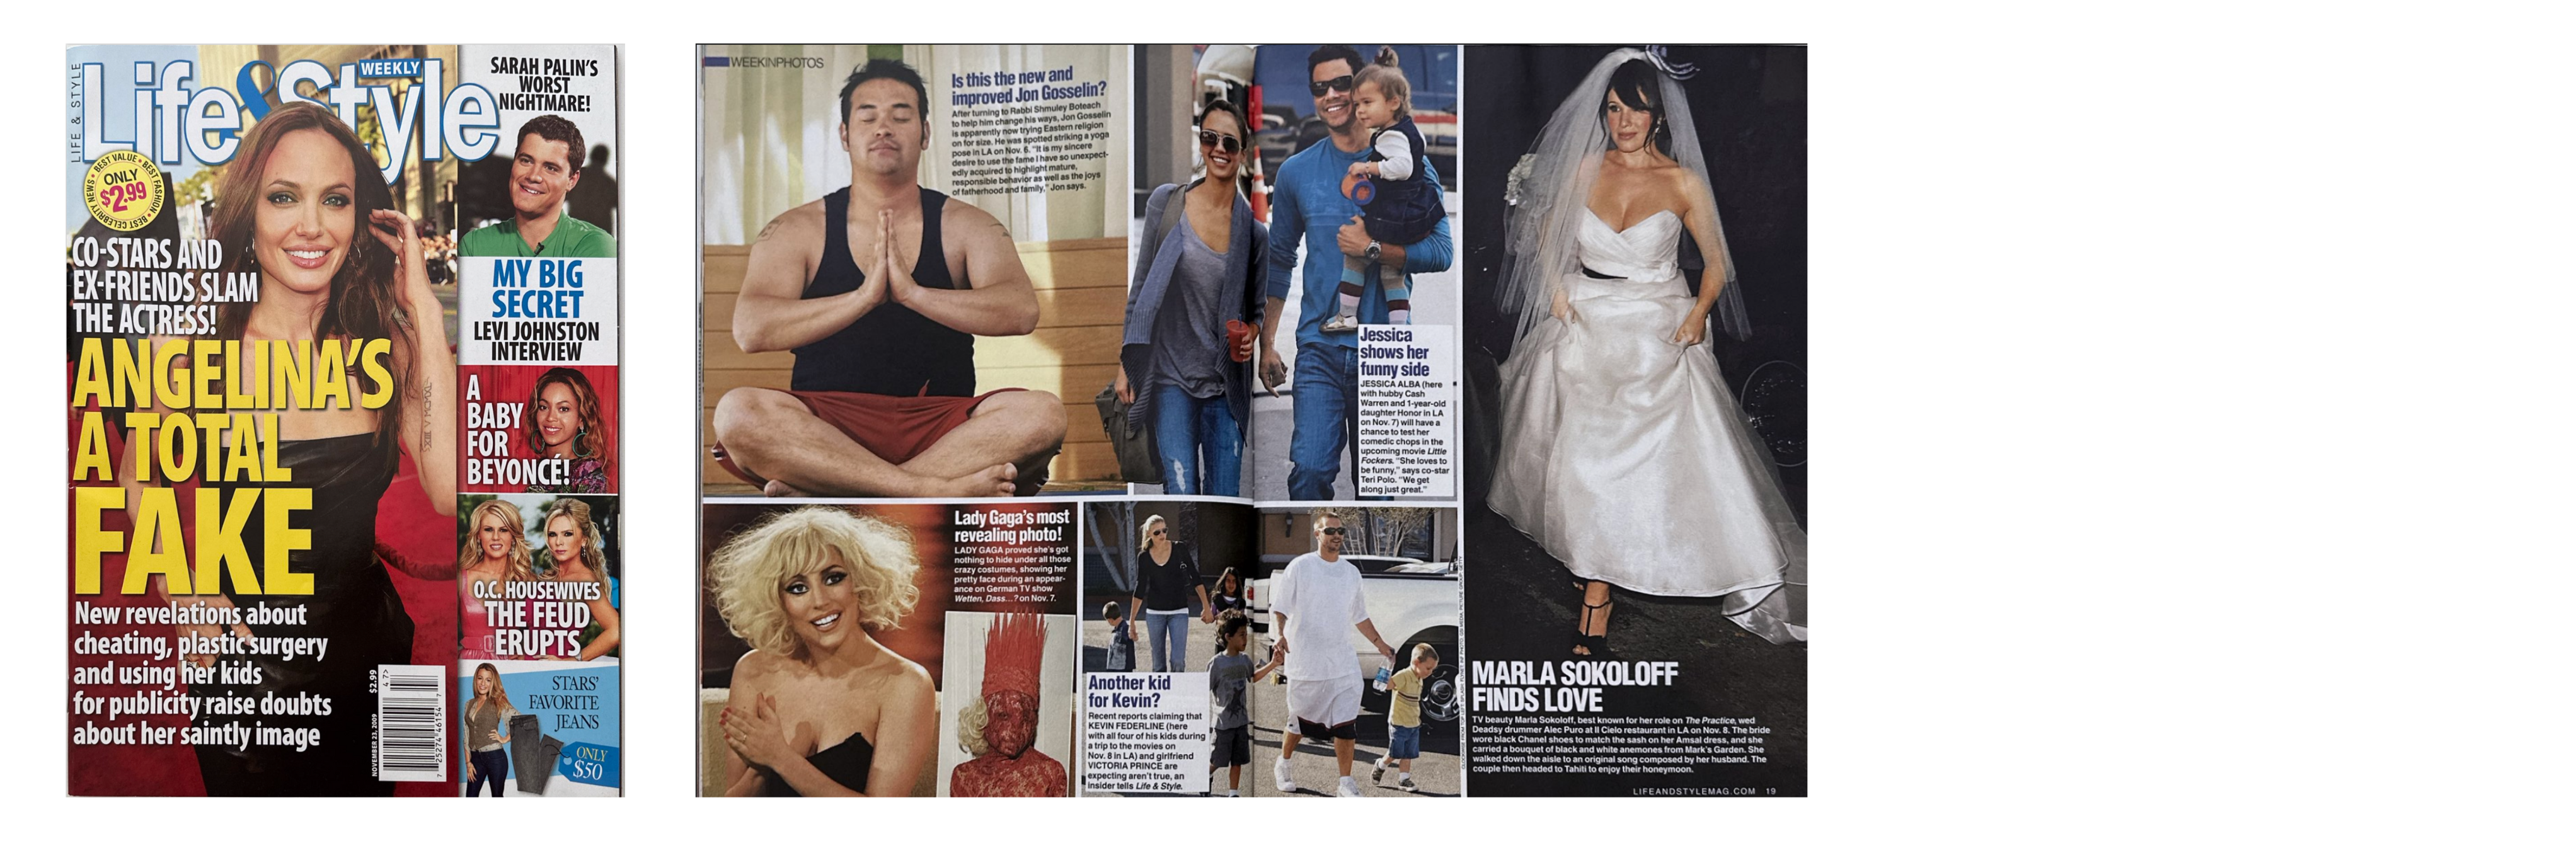 Life and Style Weekly Magazine November 23 2009